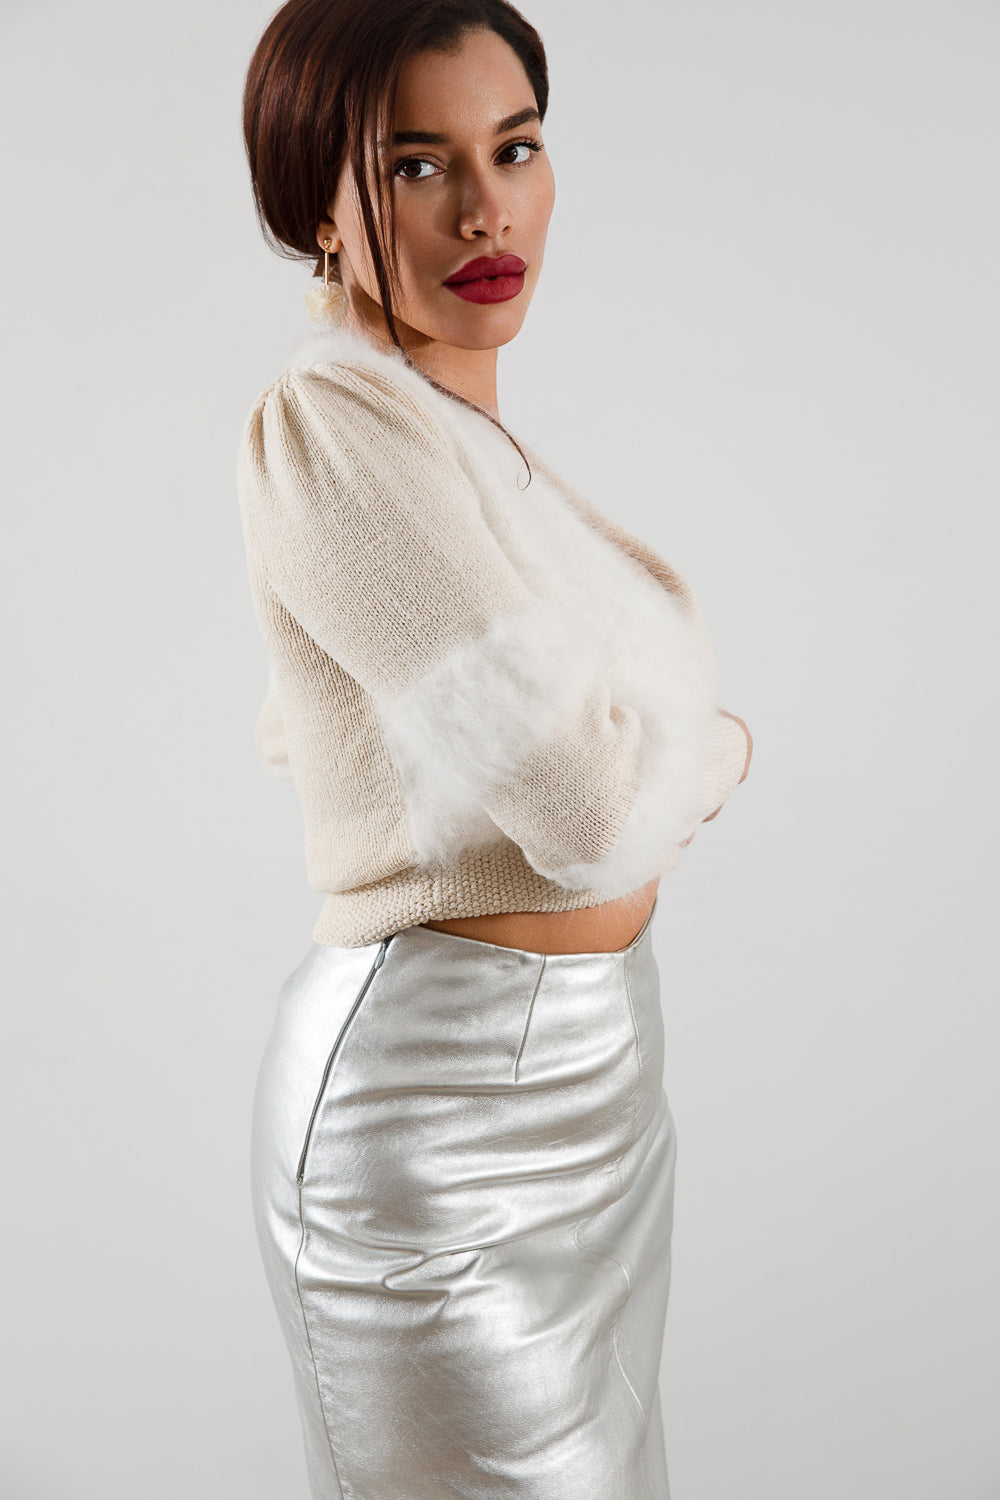 Metallic Silver Leather Skirt / Size 6-8